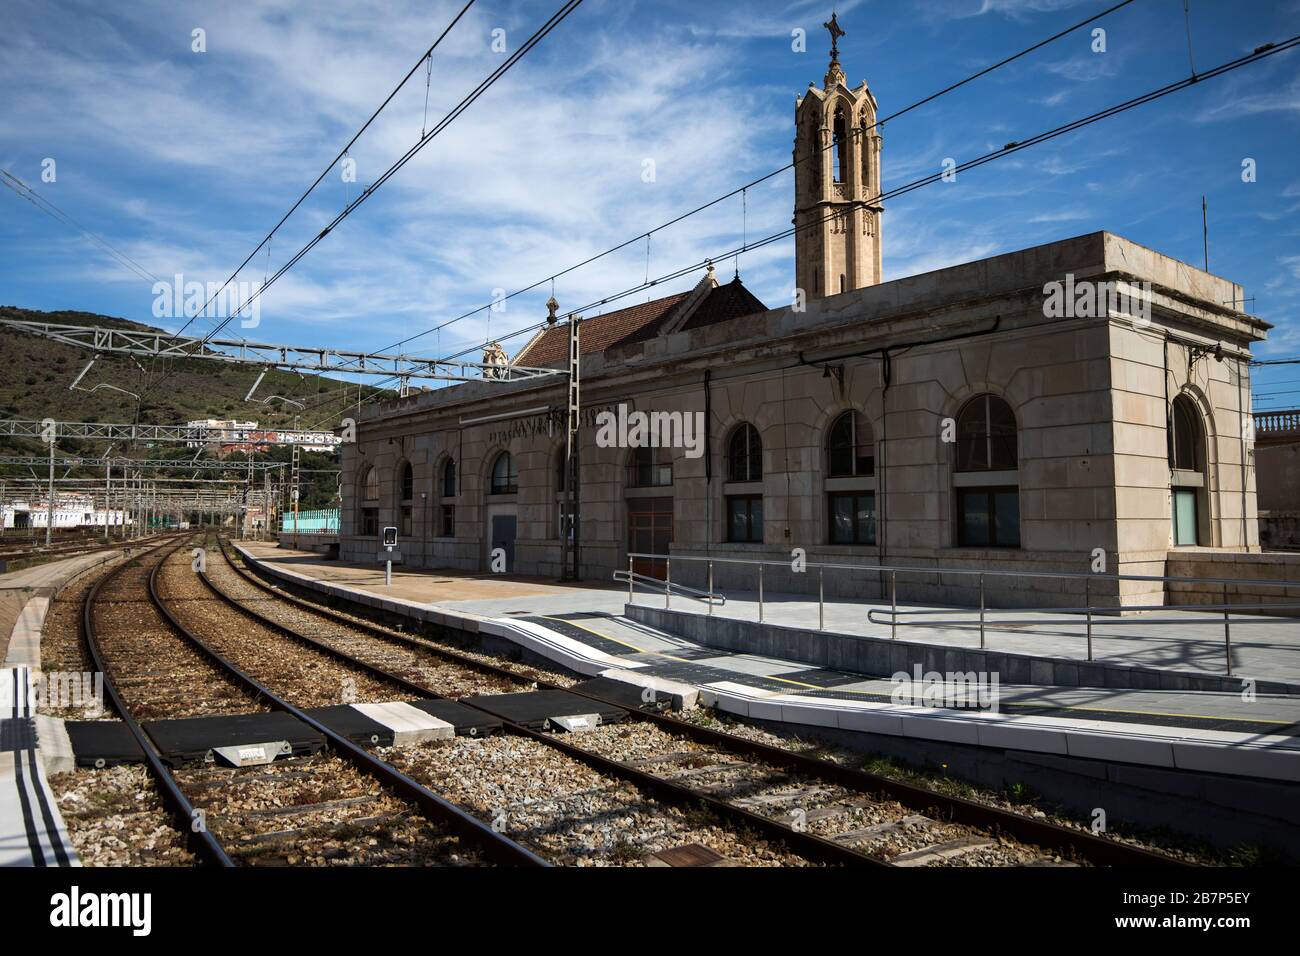 The church of Santa Maria de Potbou seen from inside the train station. Costa Brava, Girona, Spain. Stock Photo